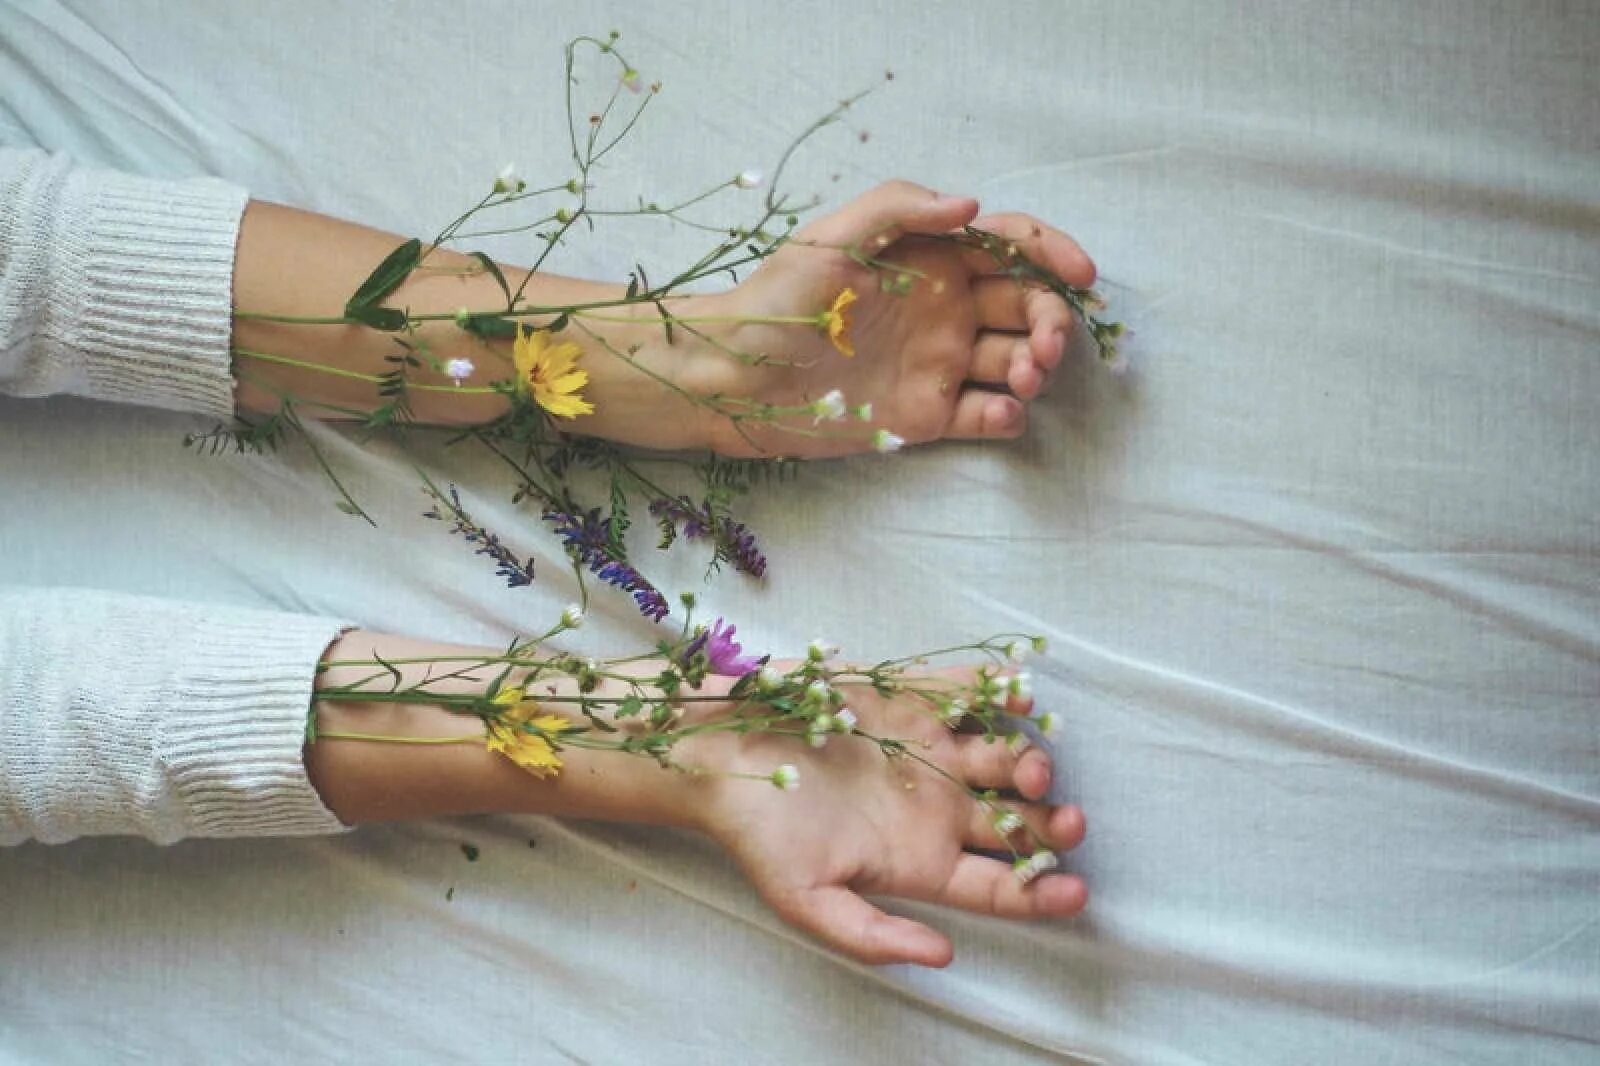 Руки Эстетика. Цветы и руки Эстетика. Живой цветок на запястье. Руки в цветах Эстетика.